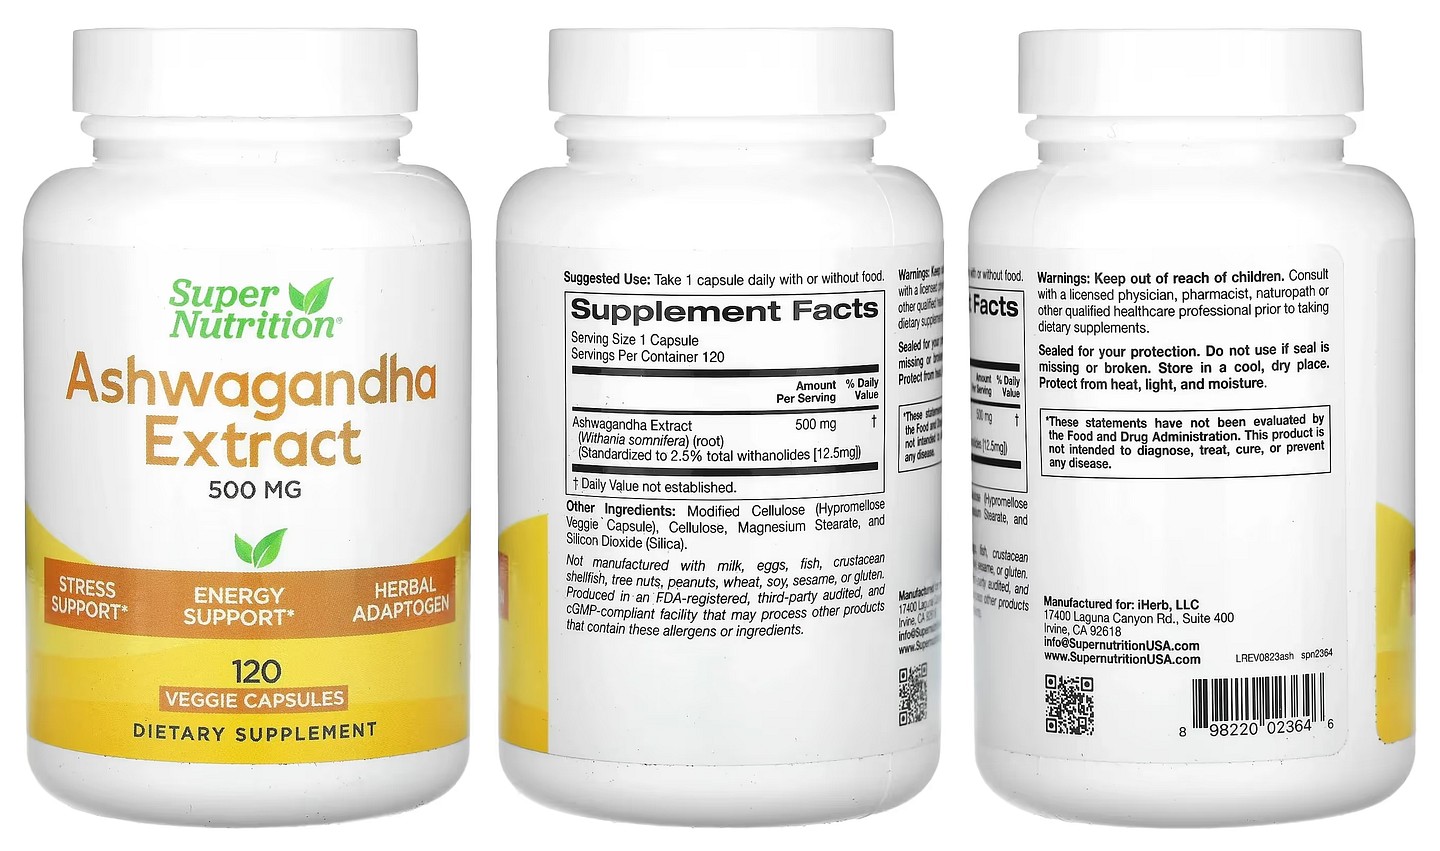 Super Nutrition, Ashwagandha packaging